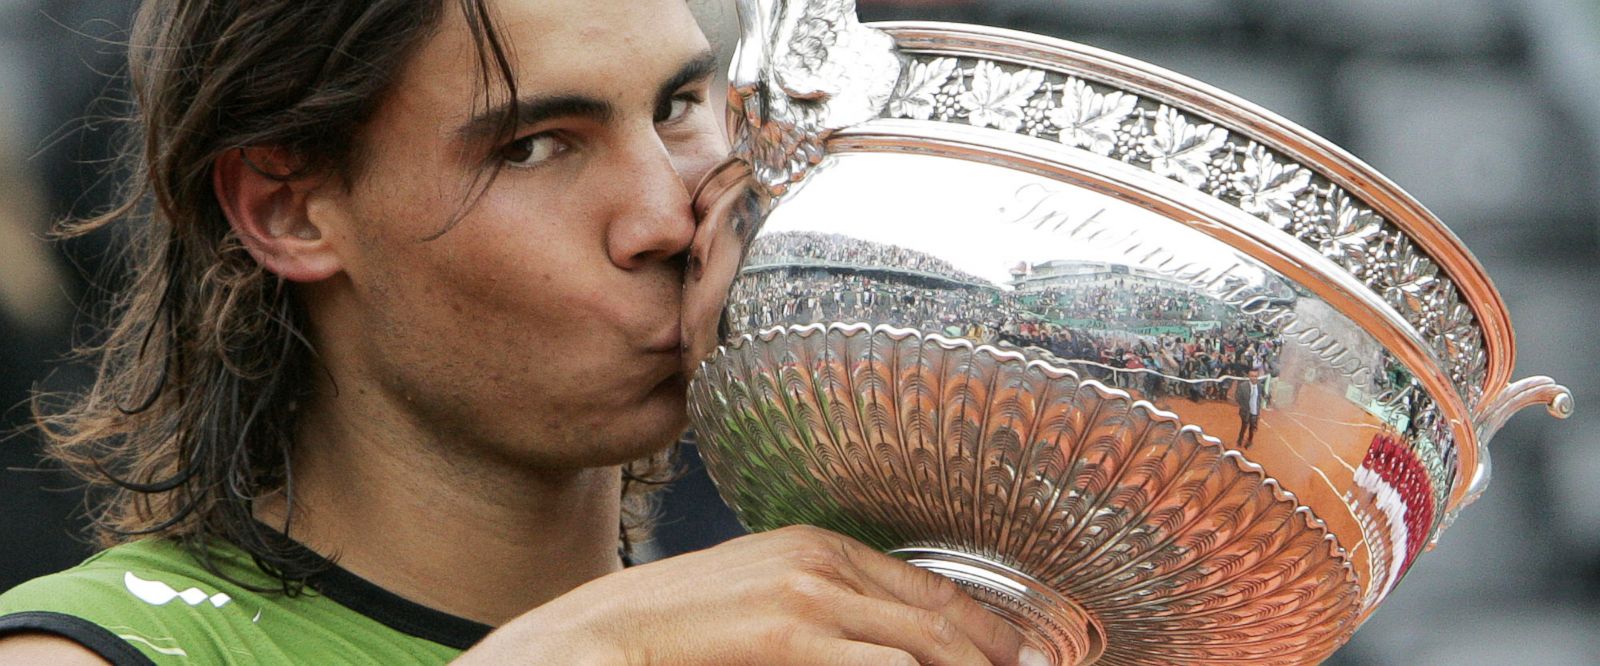 Roland Garros - Nadal - Elle man 5 - 2005